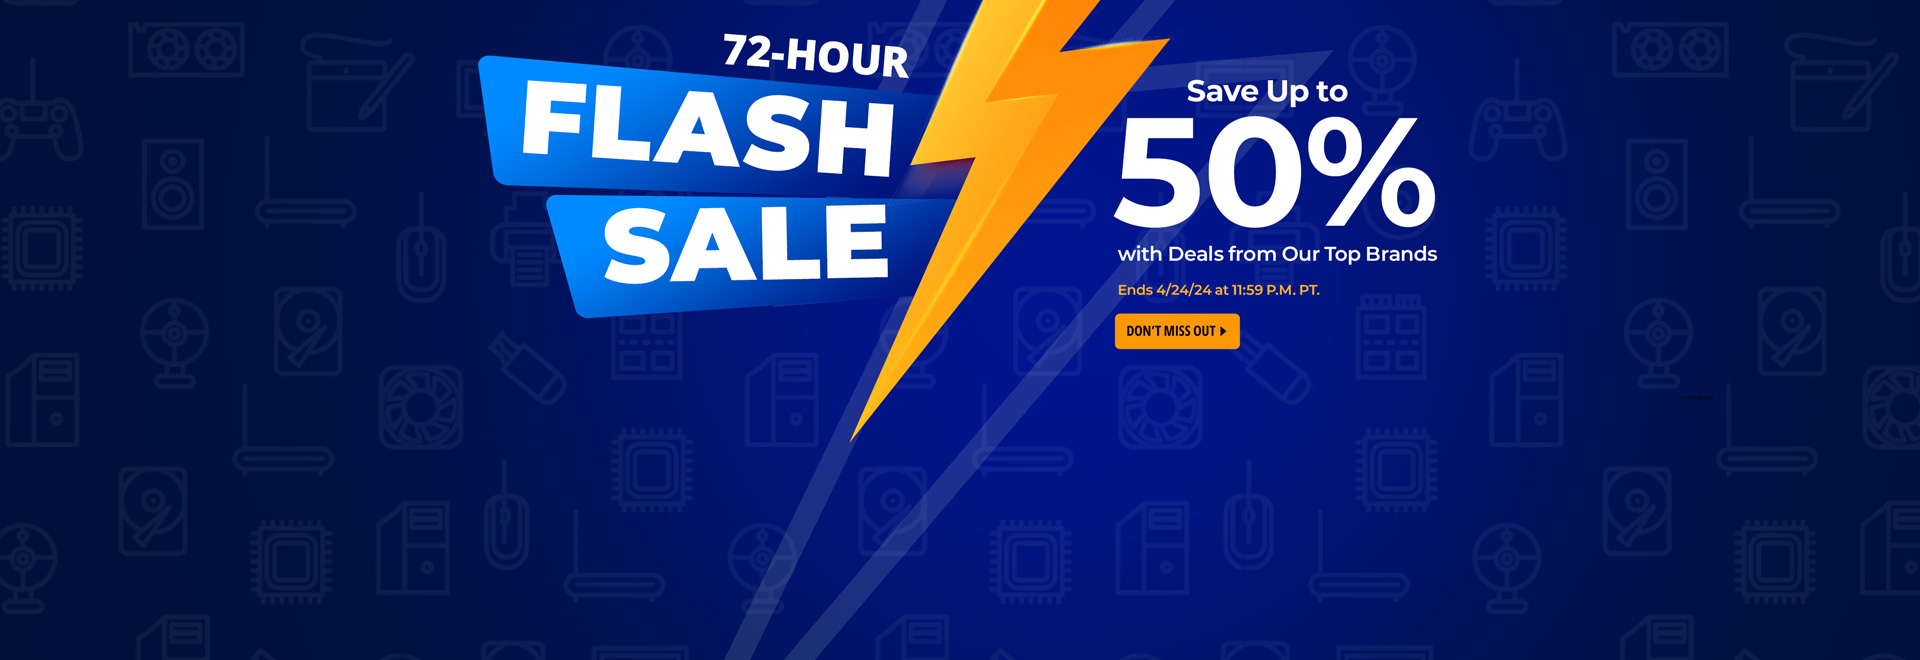 newegg.com - Flash Sale – Up To 50% Discount